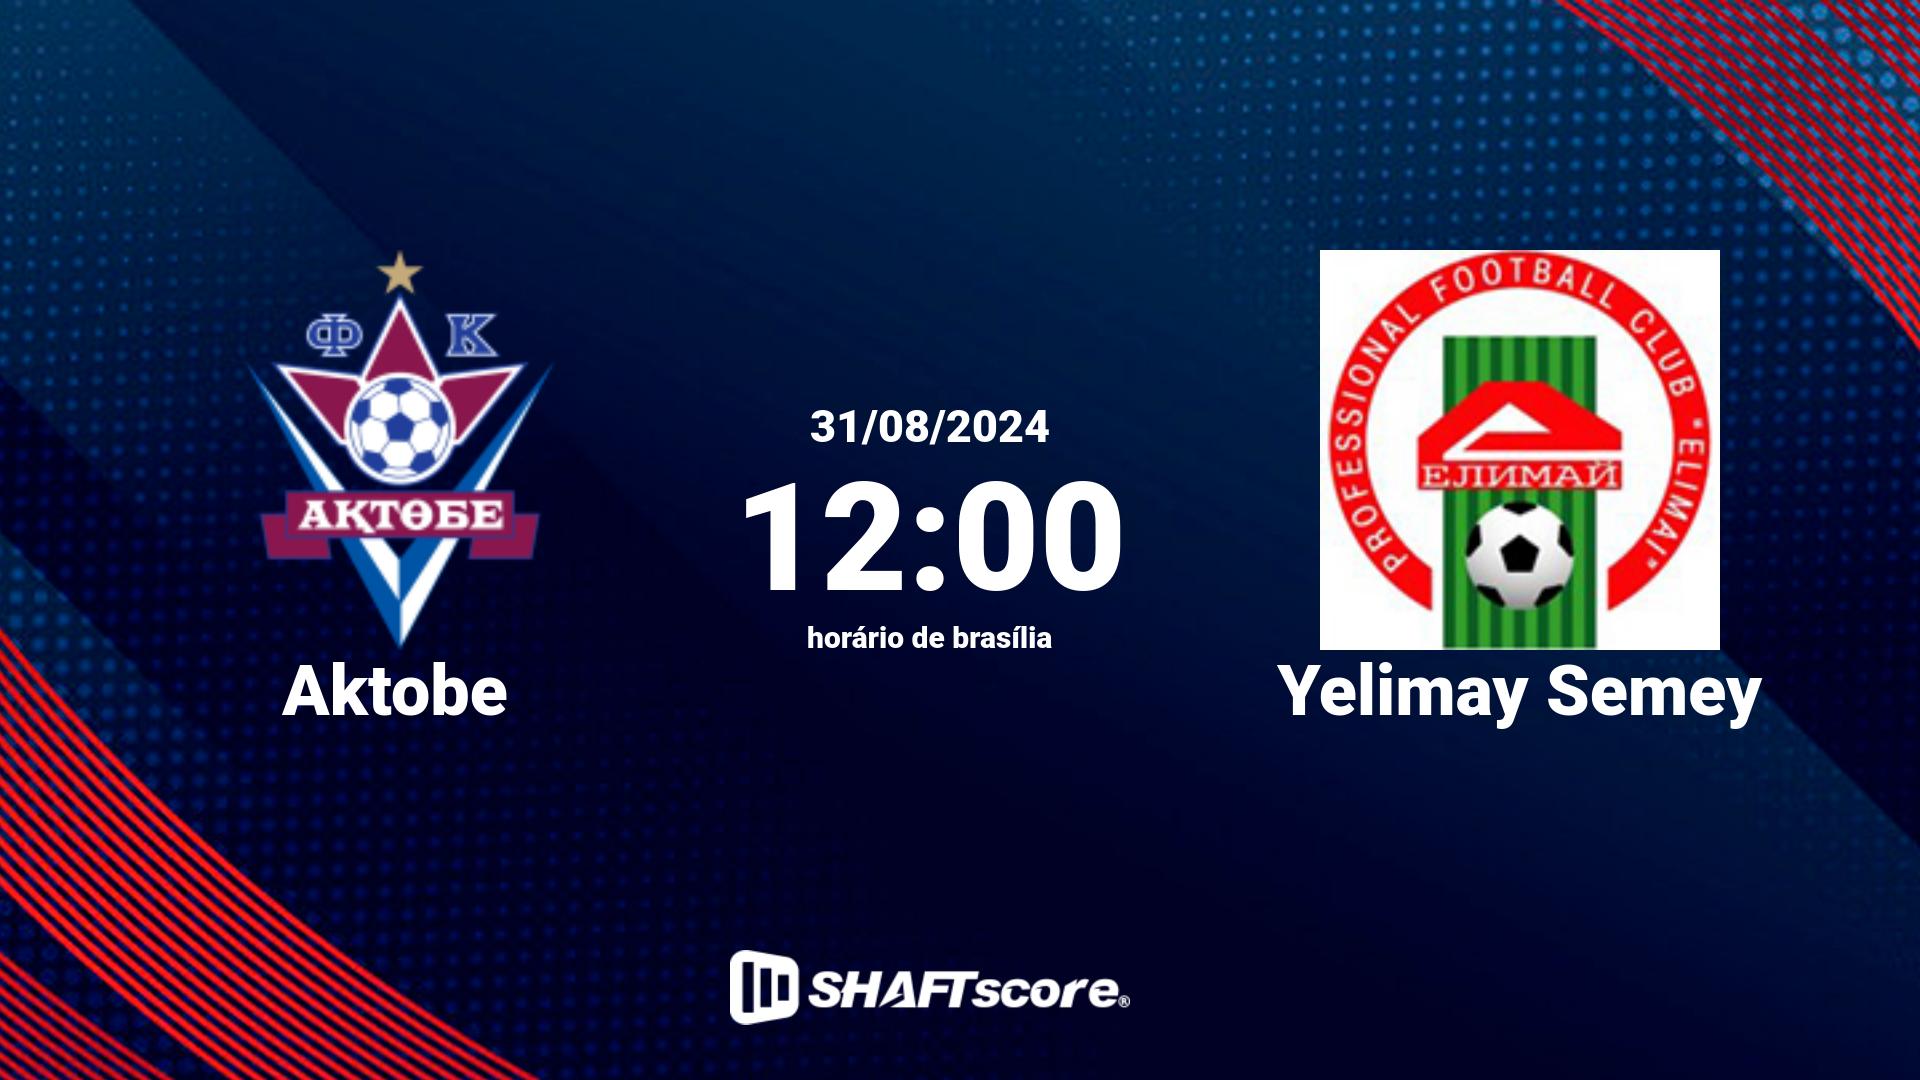 Estatísticas do jogo Aktobe vs Yelimay Semey 31.08 12:00